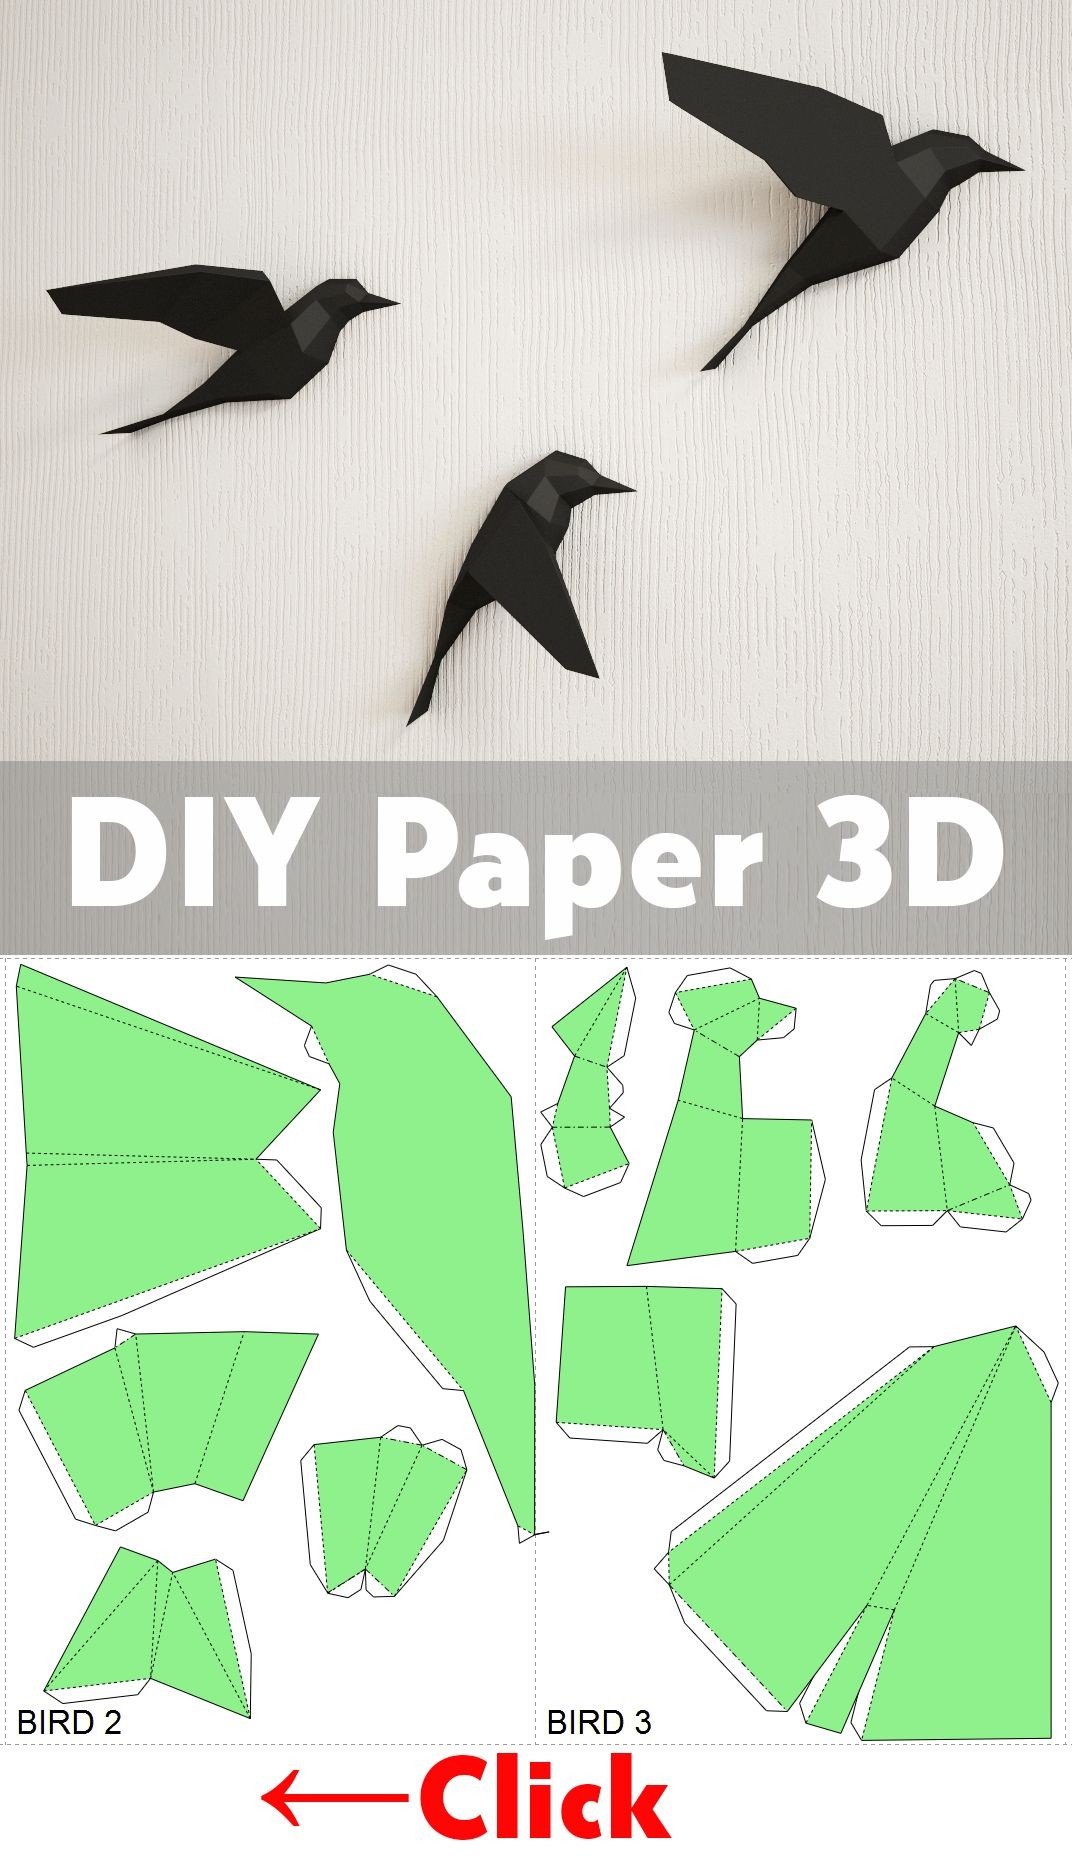 Animal Papercraft Diy Paper Birds On Wall 3d Papercraft Easy Paper Model Sculpture